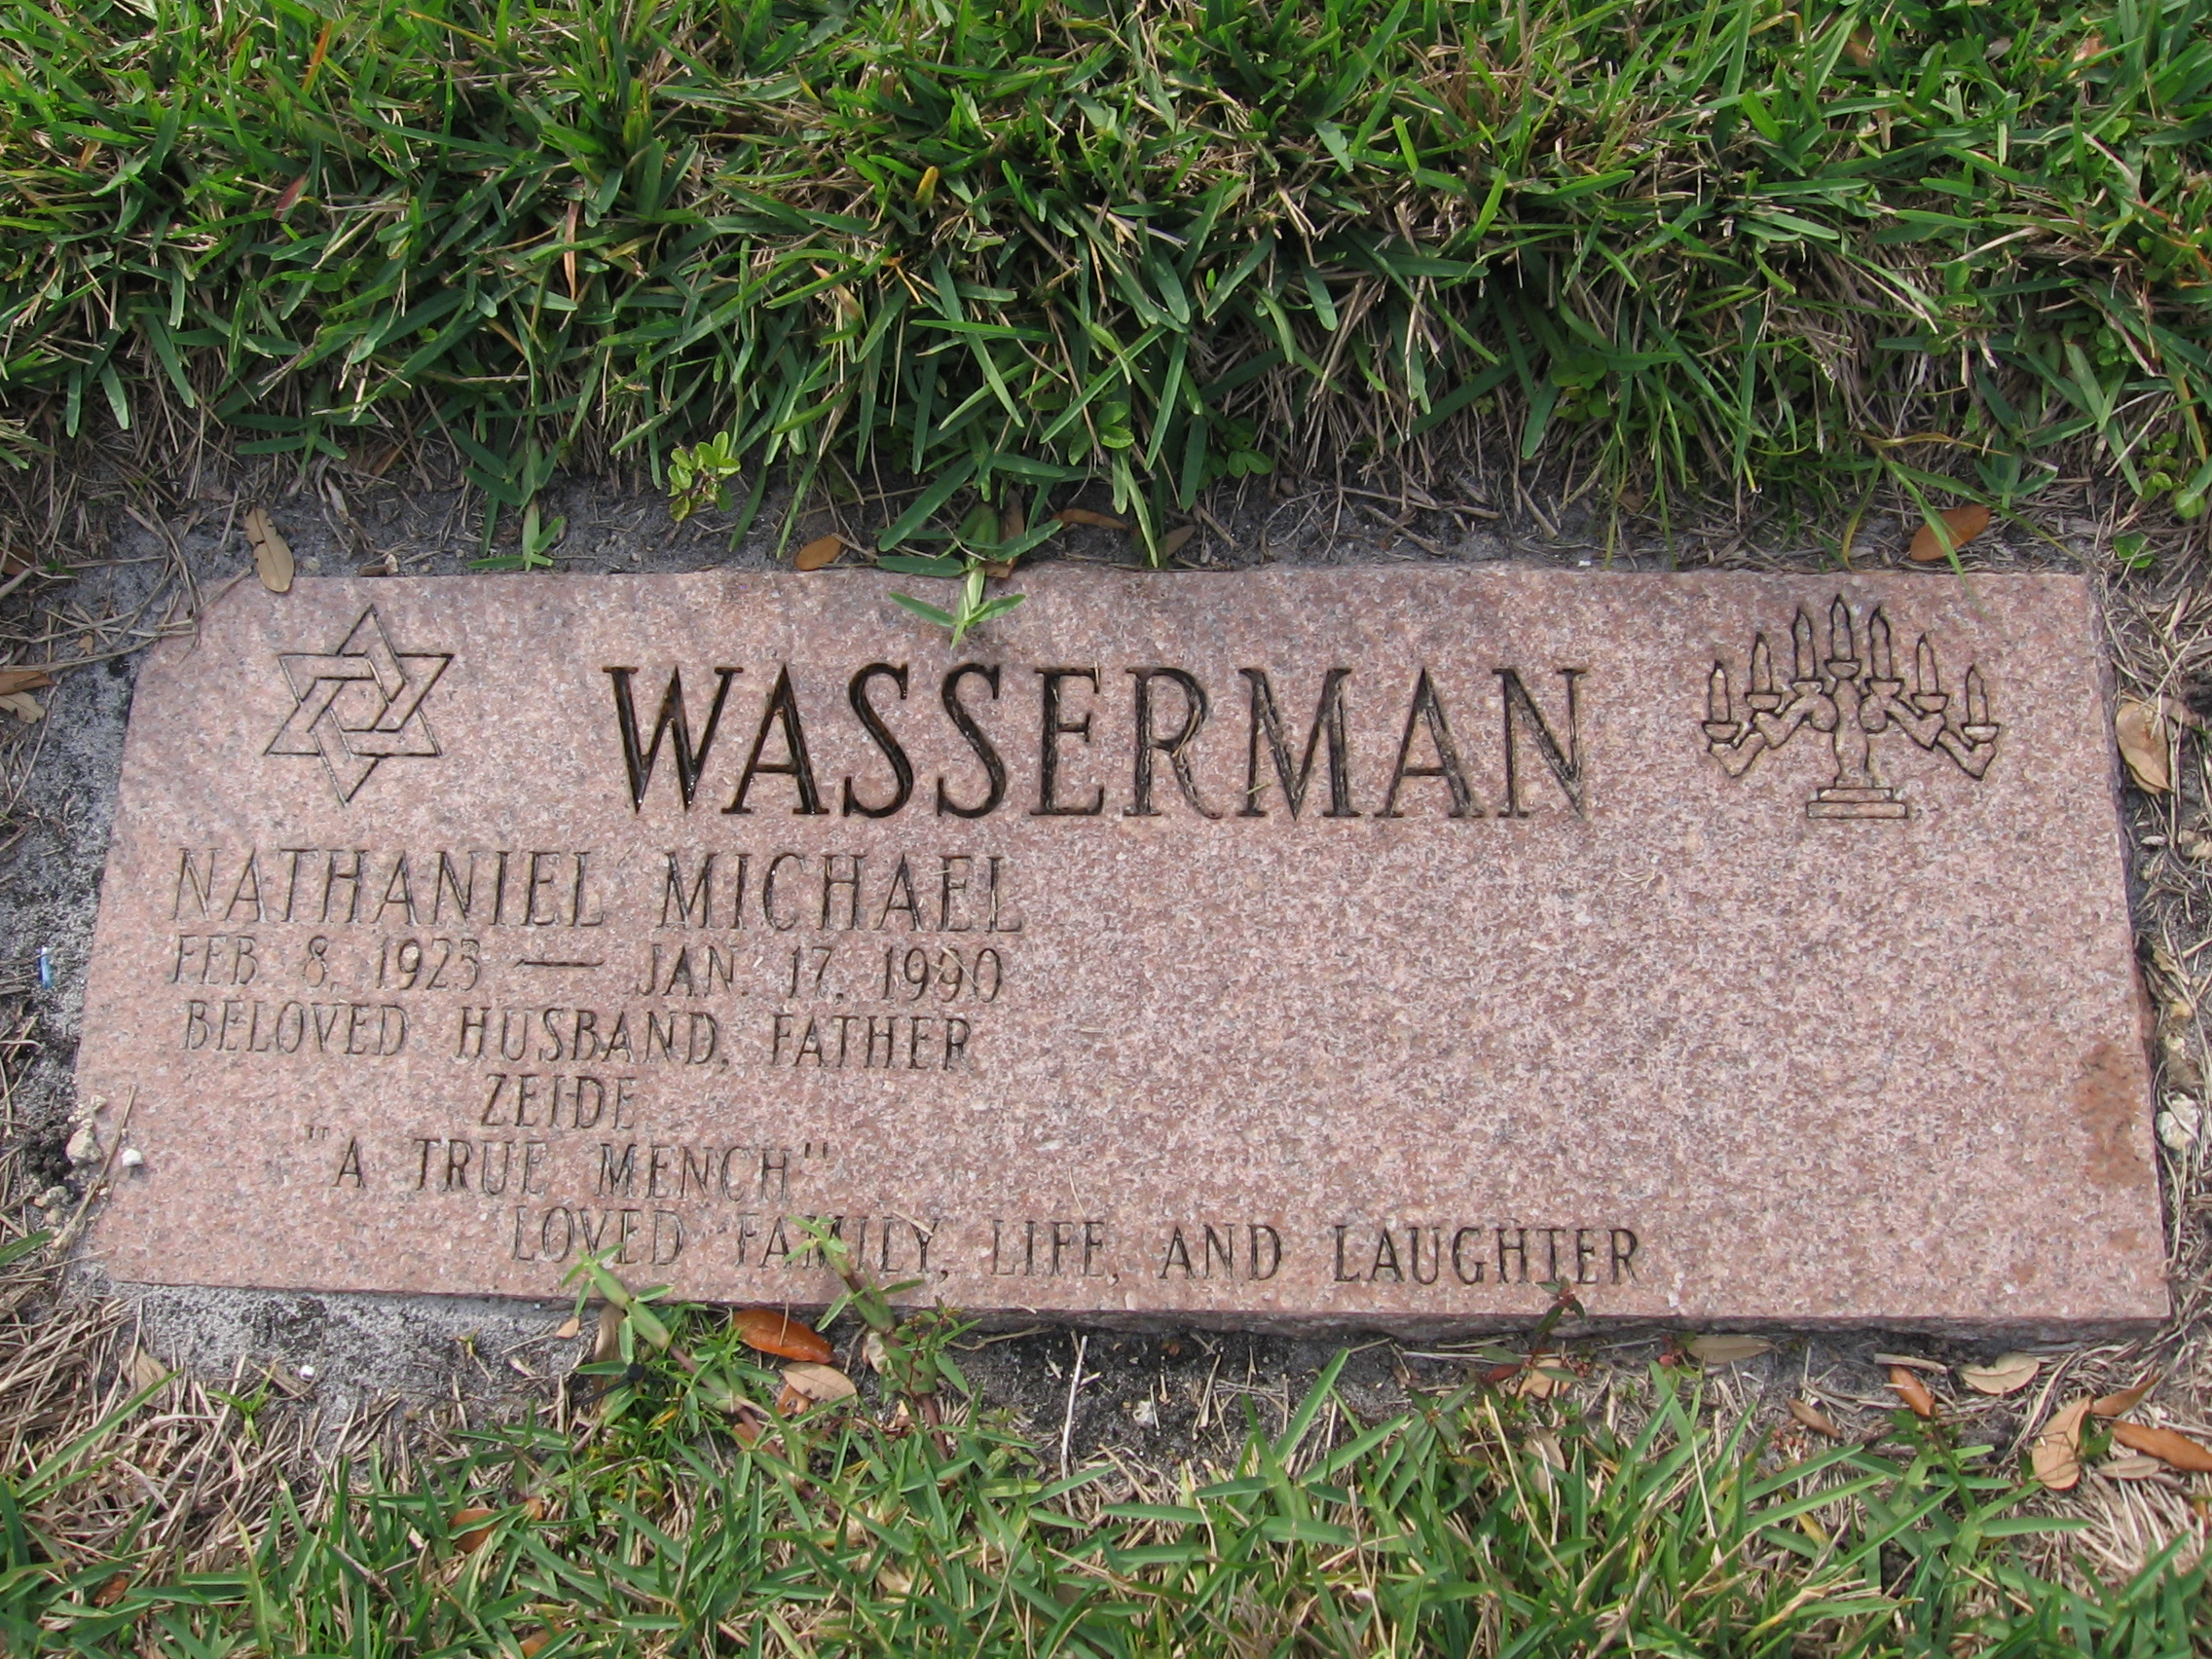 Nathaniel Michael Wasserman